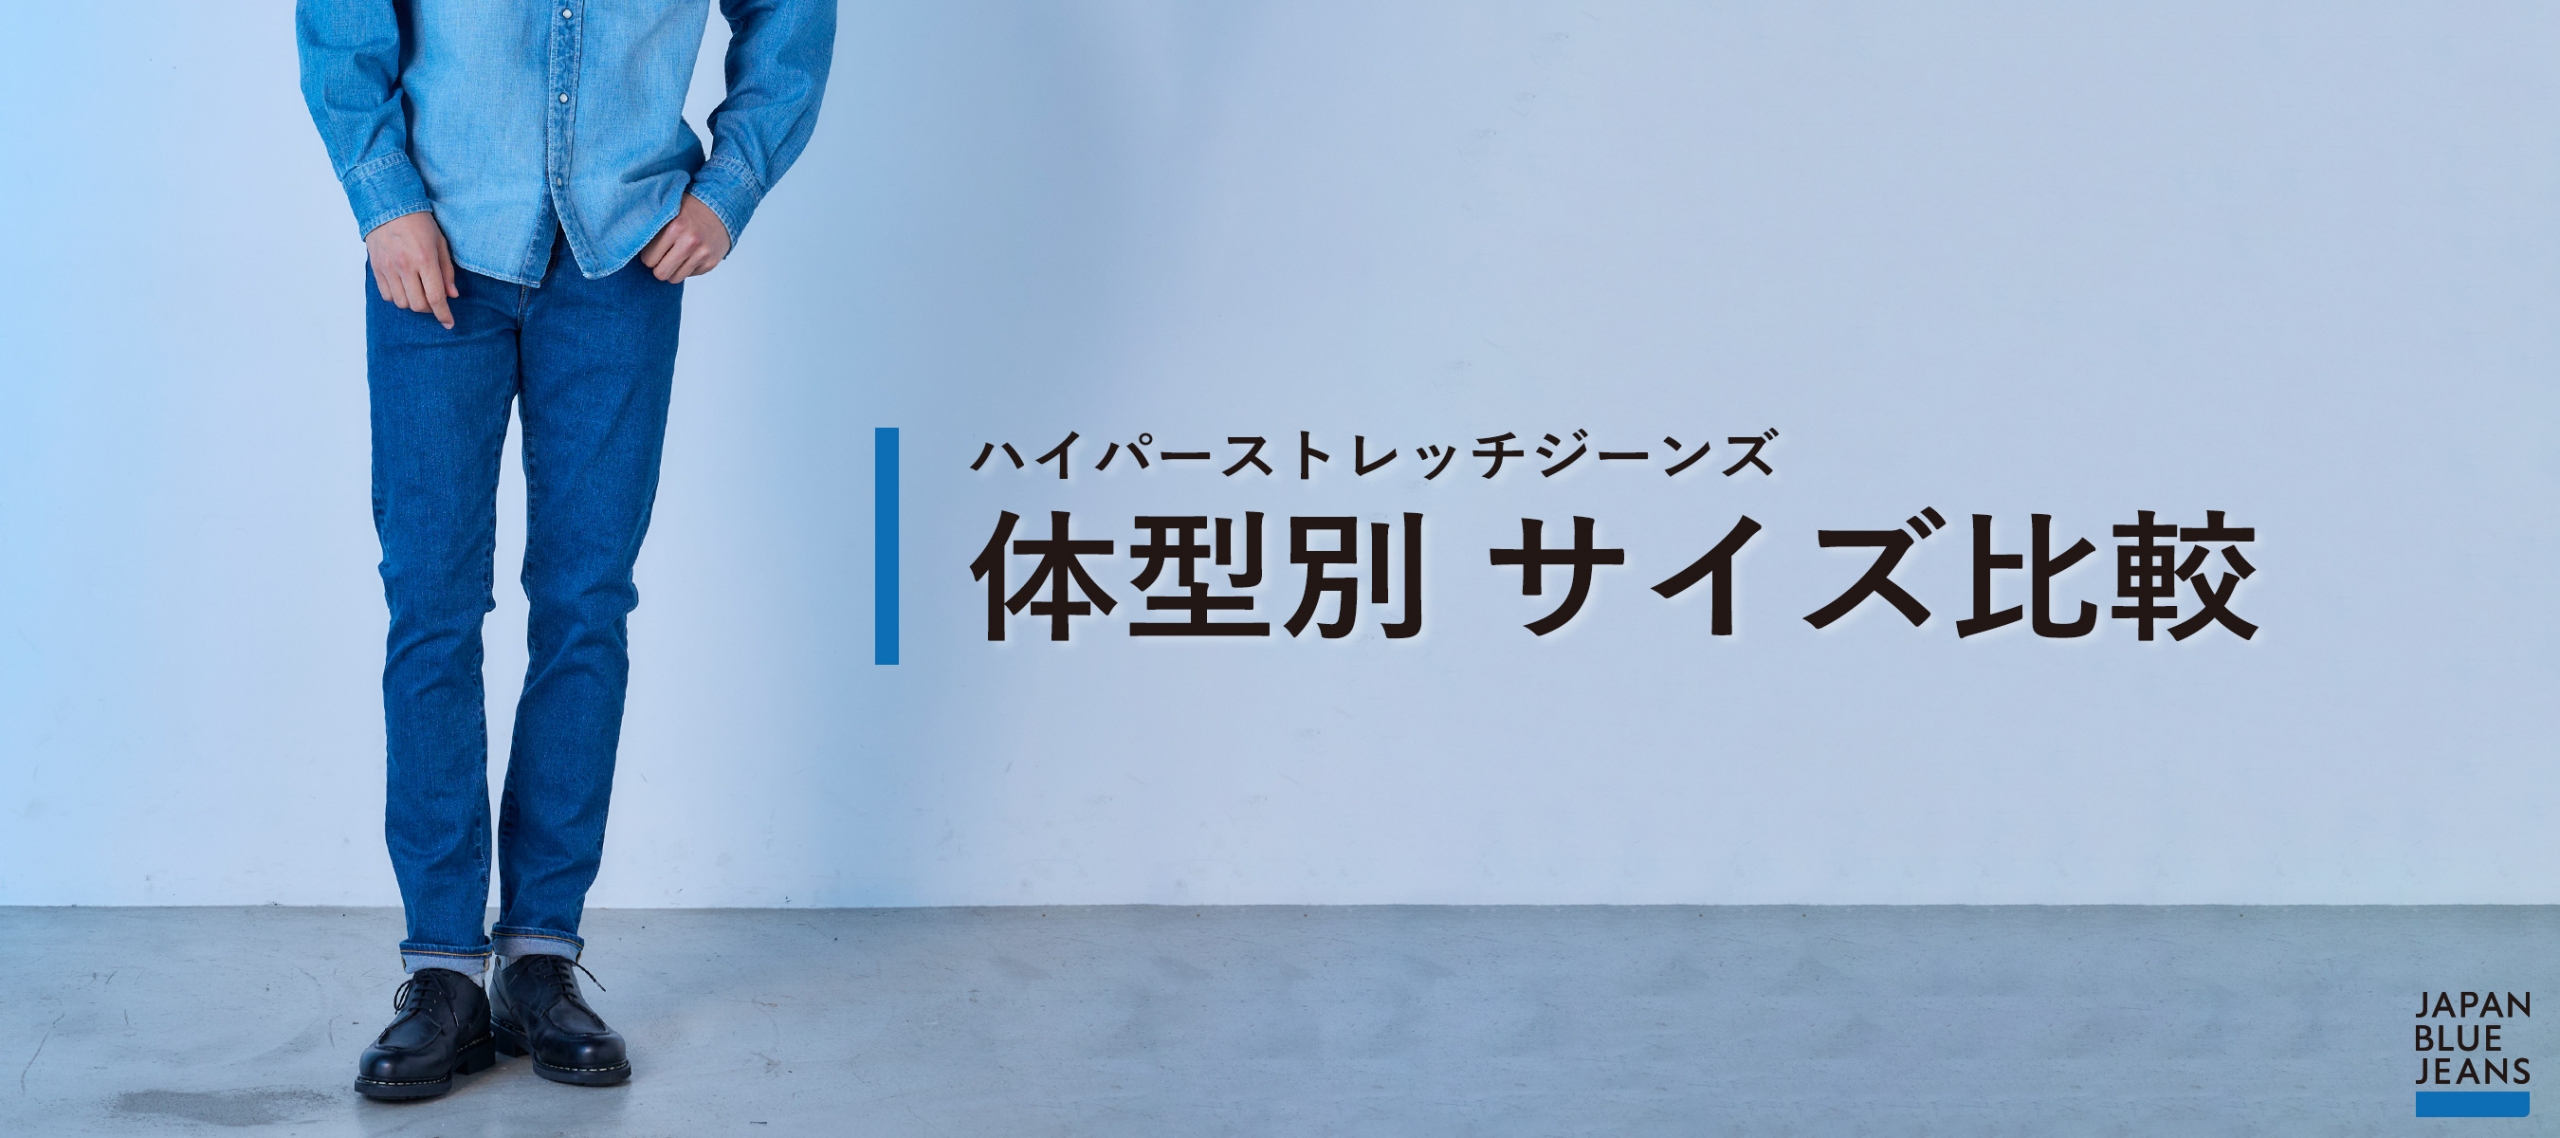 JAPAN BLUE JEANS CORONADO ダメージストレッチジーンズ